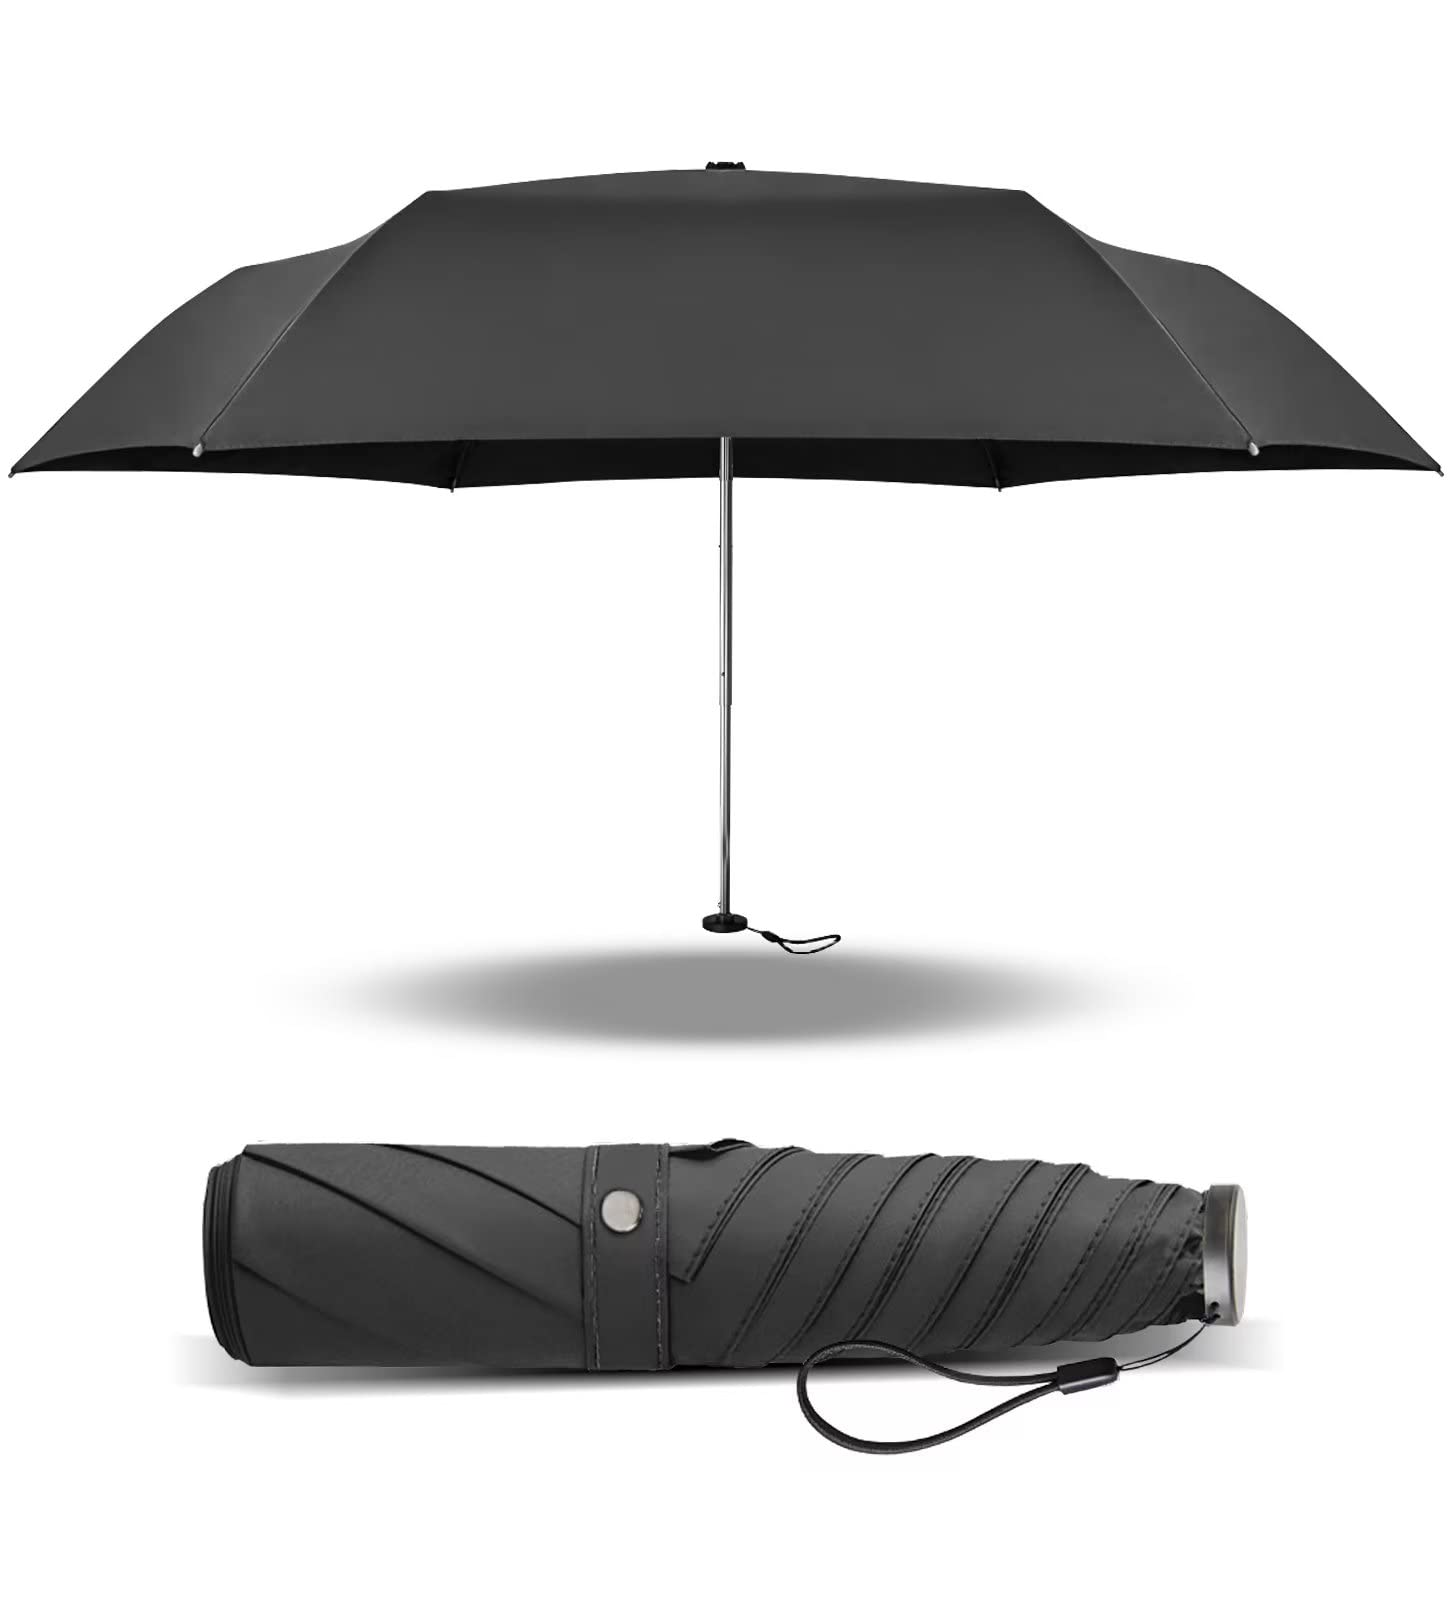 LEAGERA Mini Umbrella For Purse - UPF 50+ UV Blocker Umbrella, Small Lightweight Travel Umbrella Compact Sun Umbrella, Women Kids Parasol Umbrellas